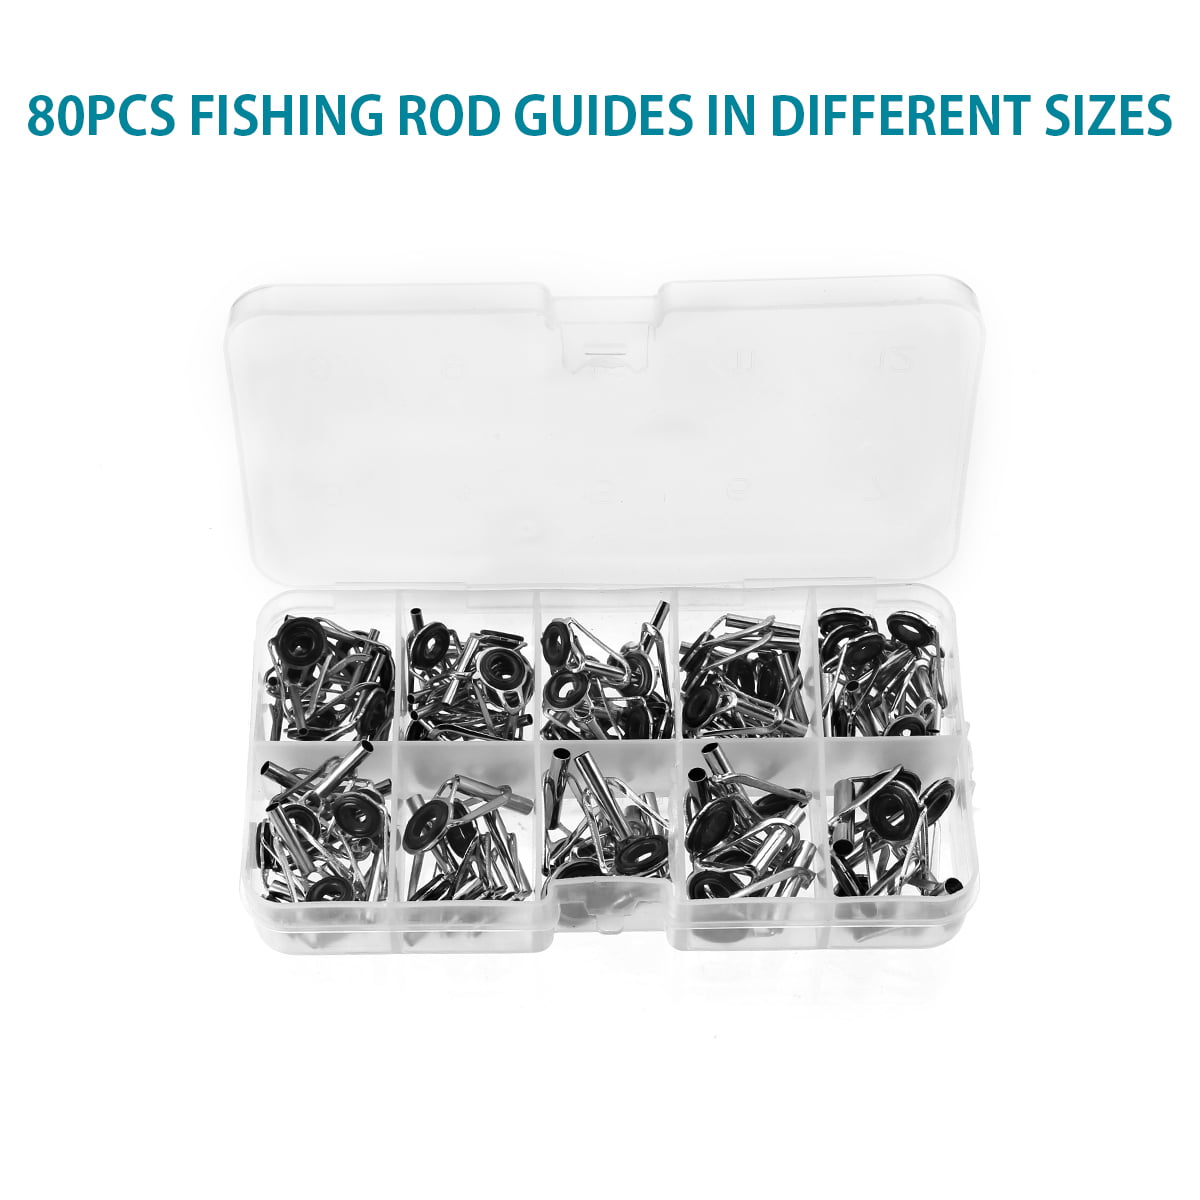 Details about   80PCS Ceramic Fishing Rod Guide Tips Top Eye Rings Line Repair Kit 10 Sizes Set 